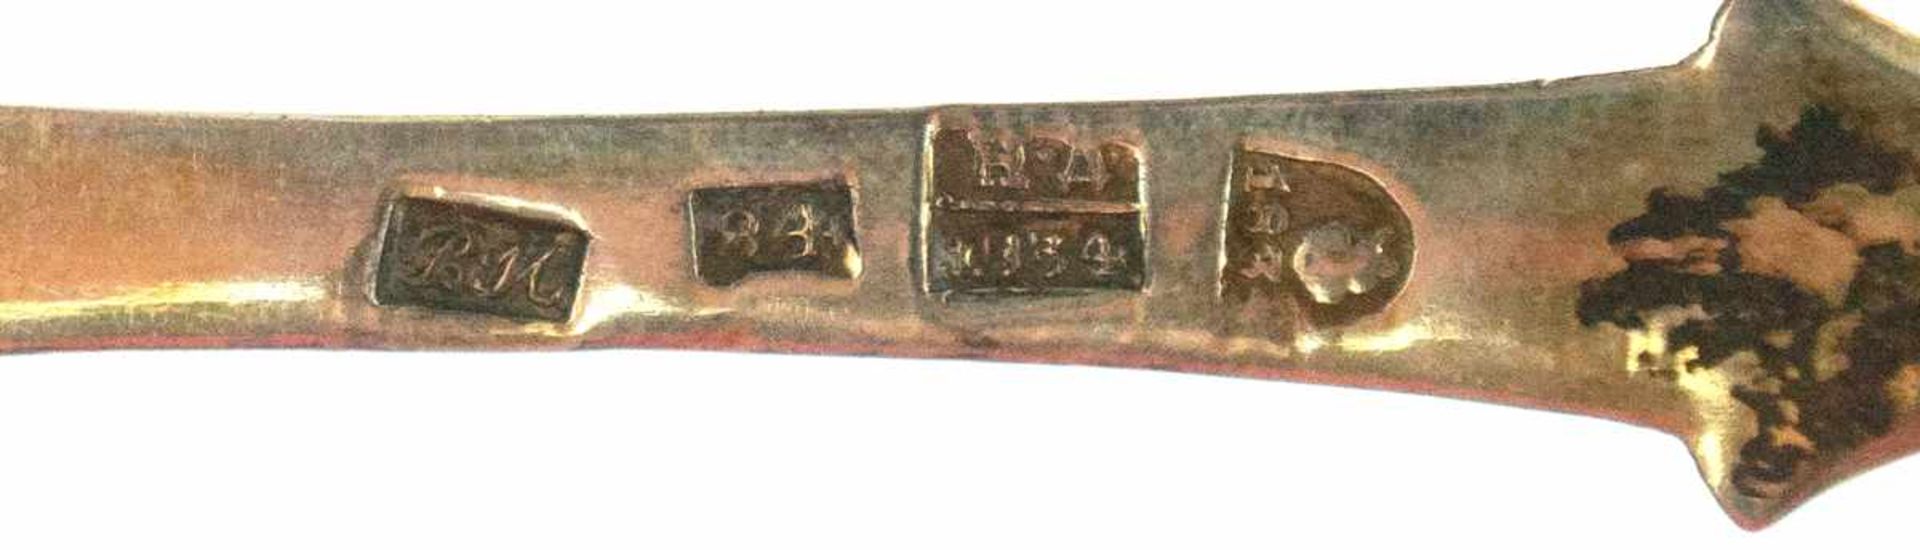 2 Löffel, Moskau 1833/34, 84 Zol. Silber, punziert, ca. 76 g, vergoldet, Niellodekor,Spatenform, - Image 3 of 3